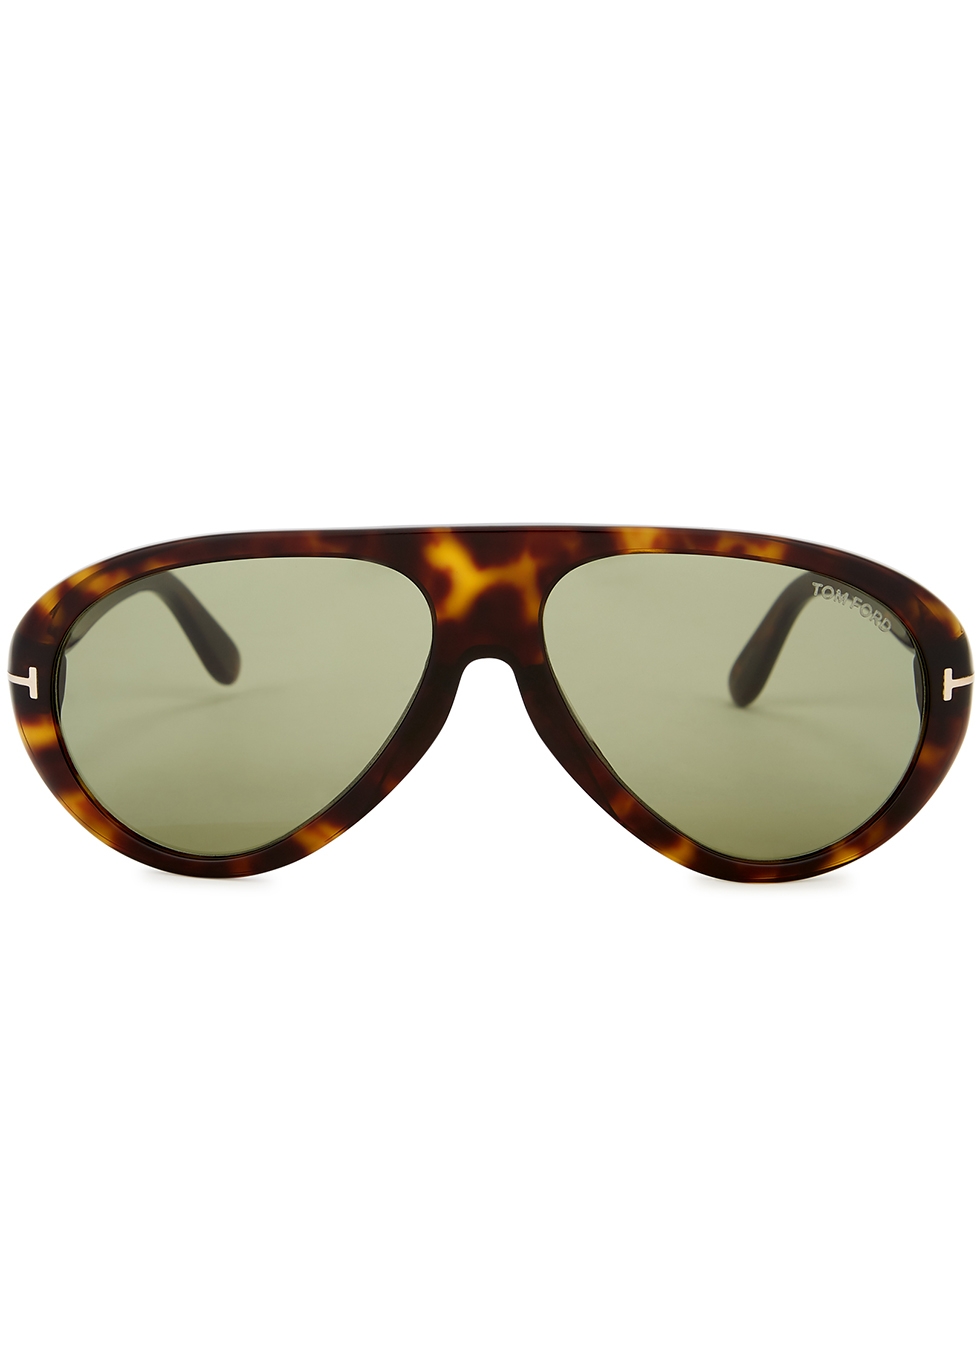 Tom Ford Camilo-02 Tortoiseshell D-frame Sunglasses in Brown for Men Mens Accessories Sunglasses 